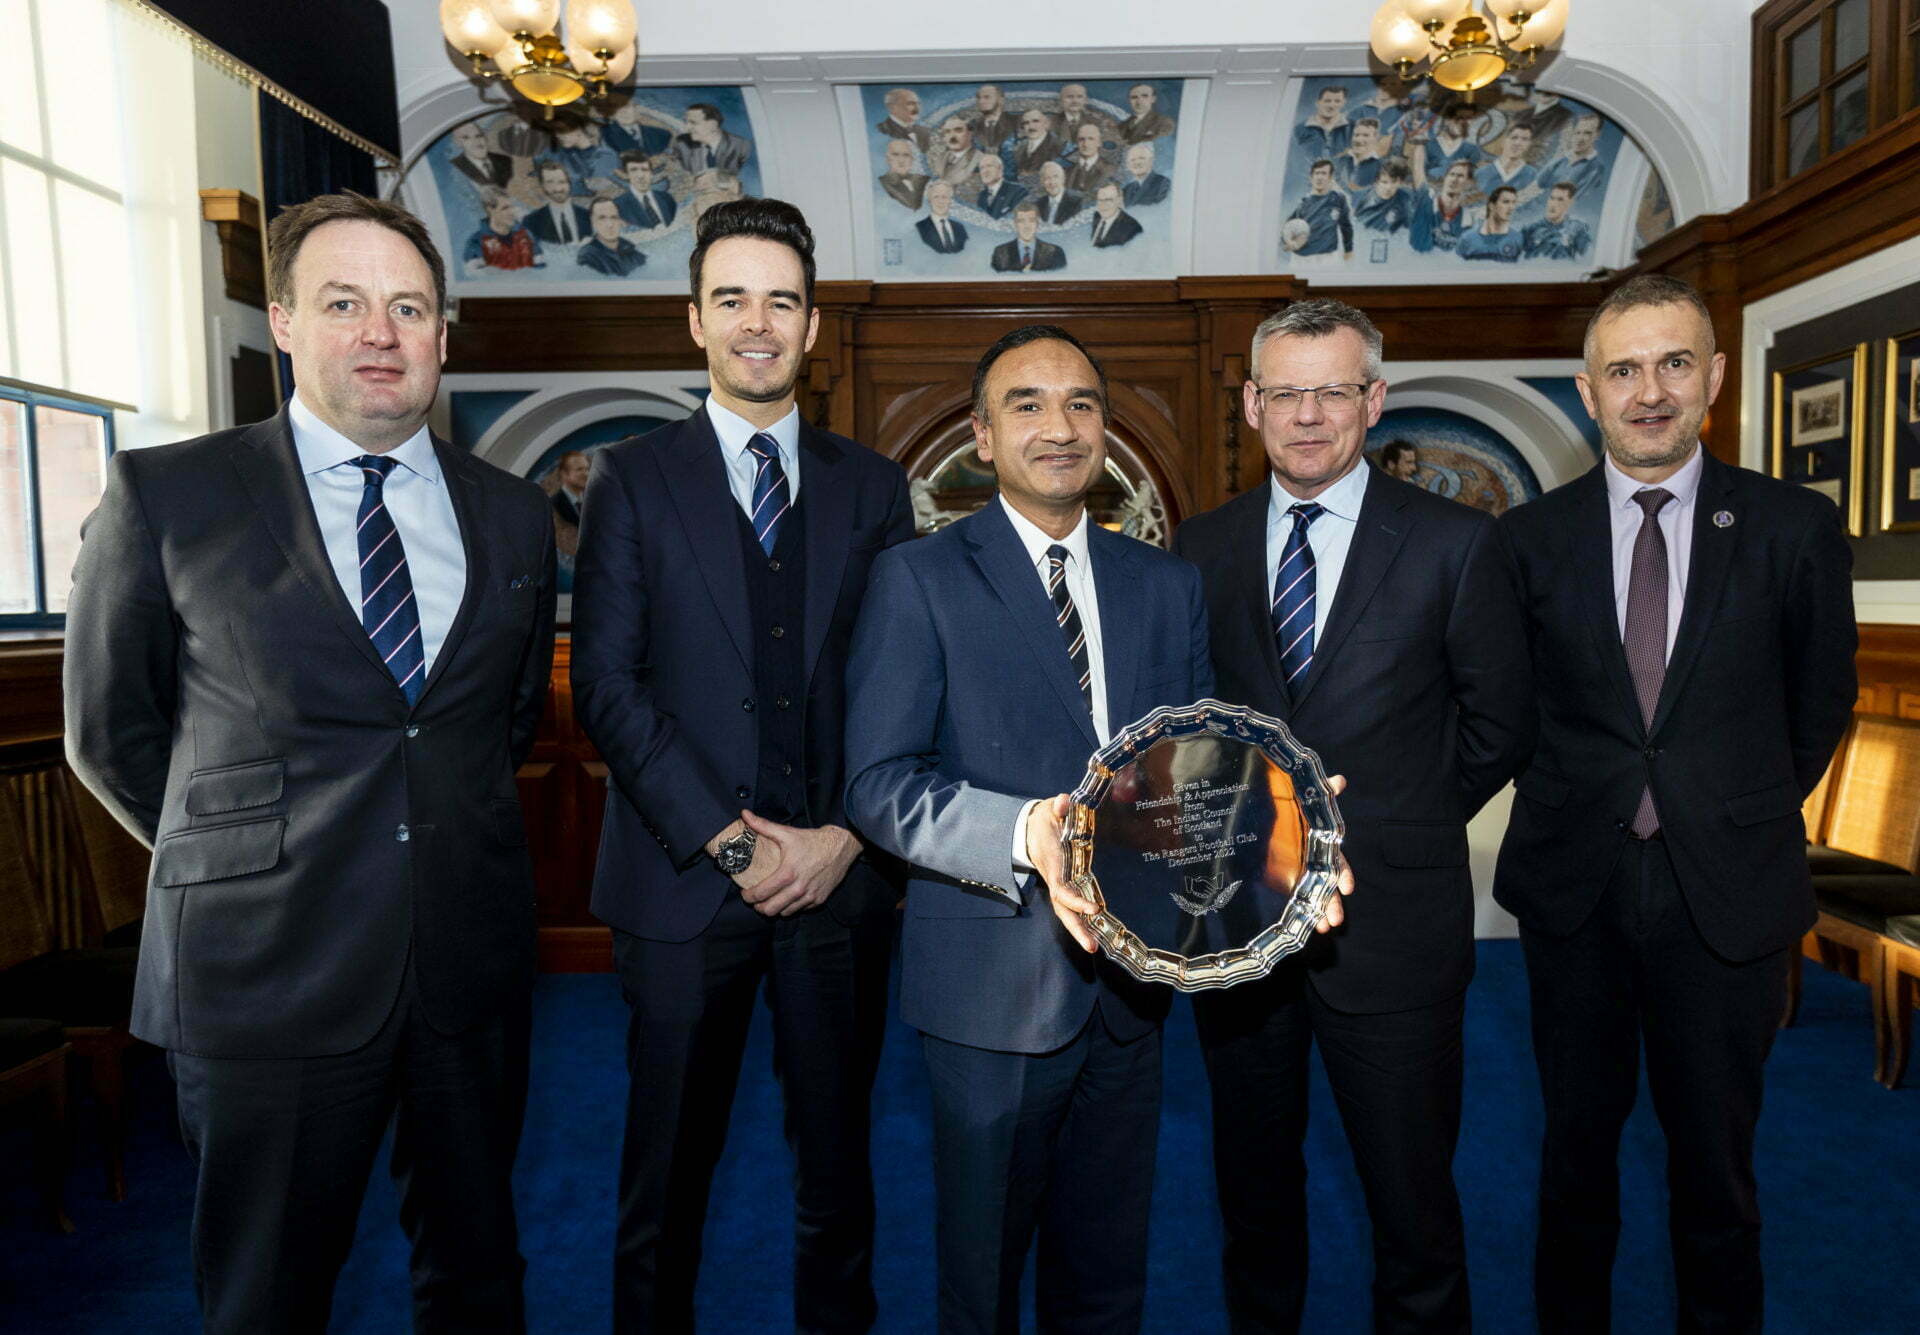 Rangers win prestigious award for ‘Everyone, Anyone’ campaign